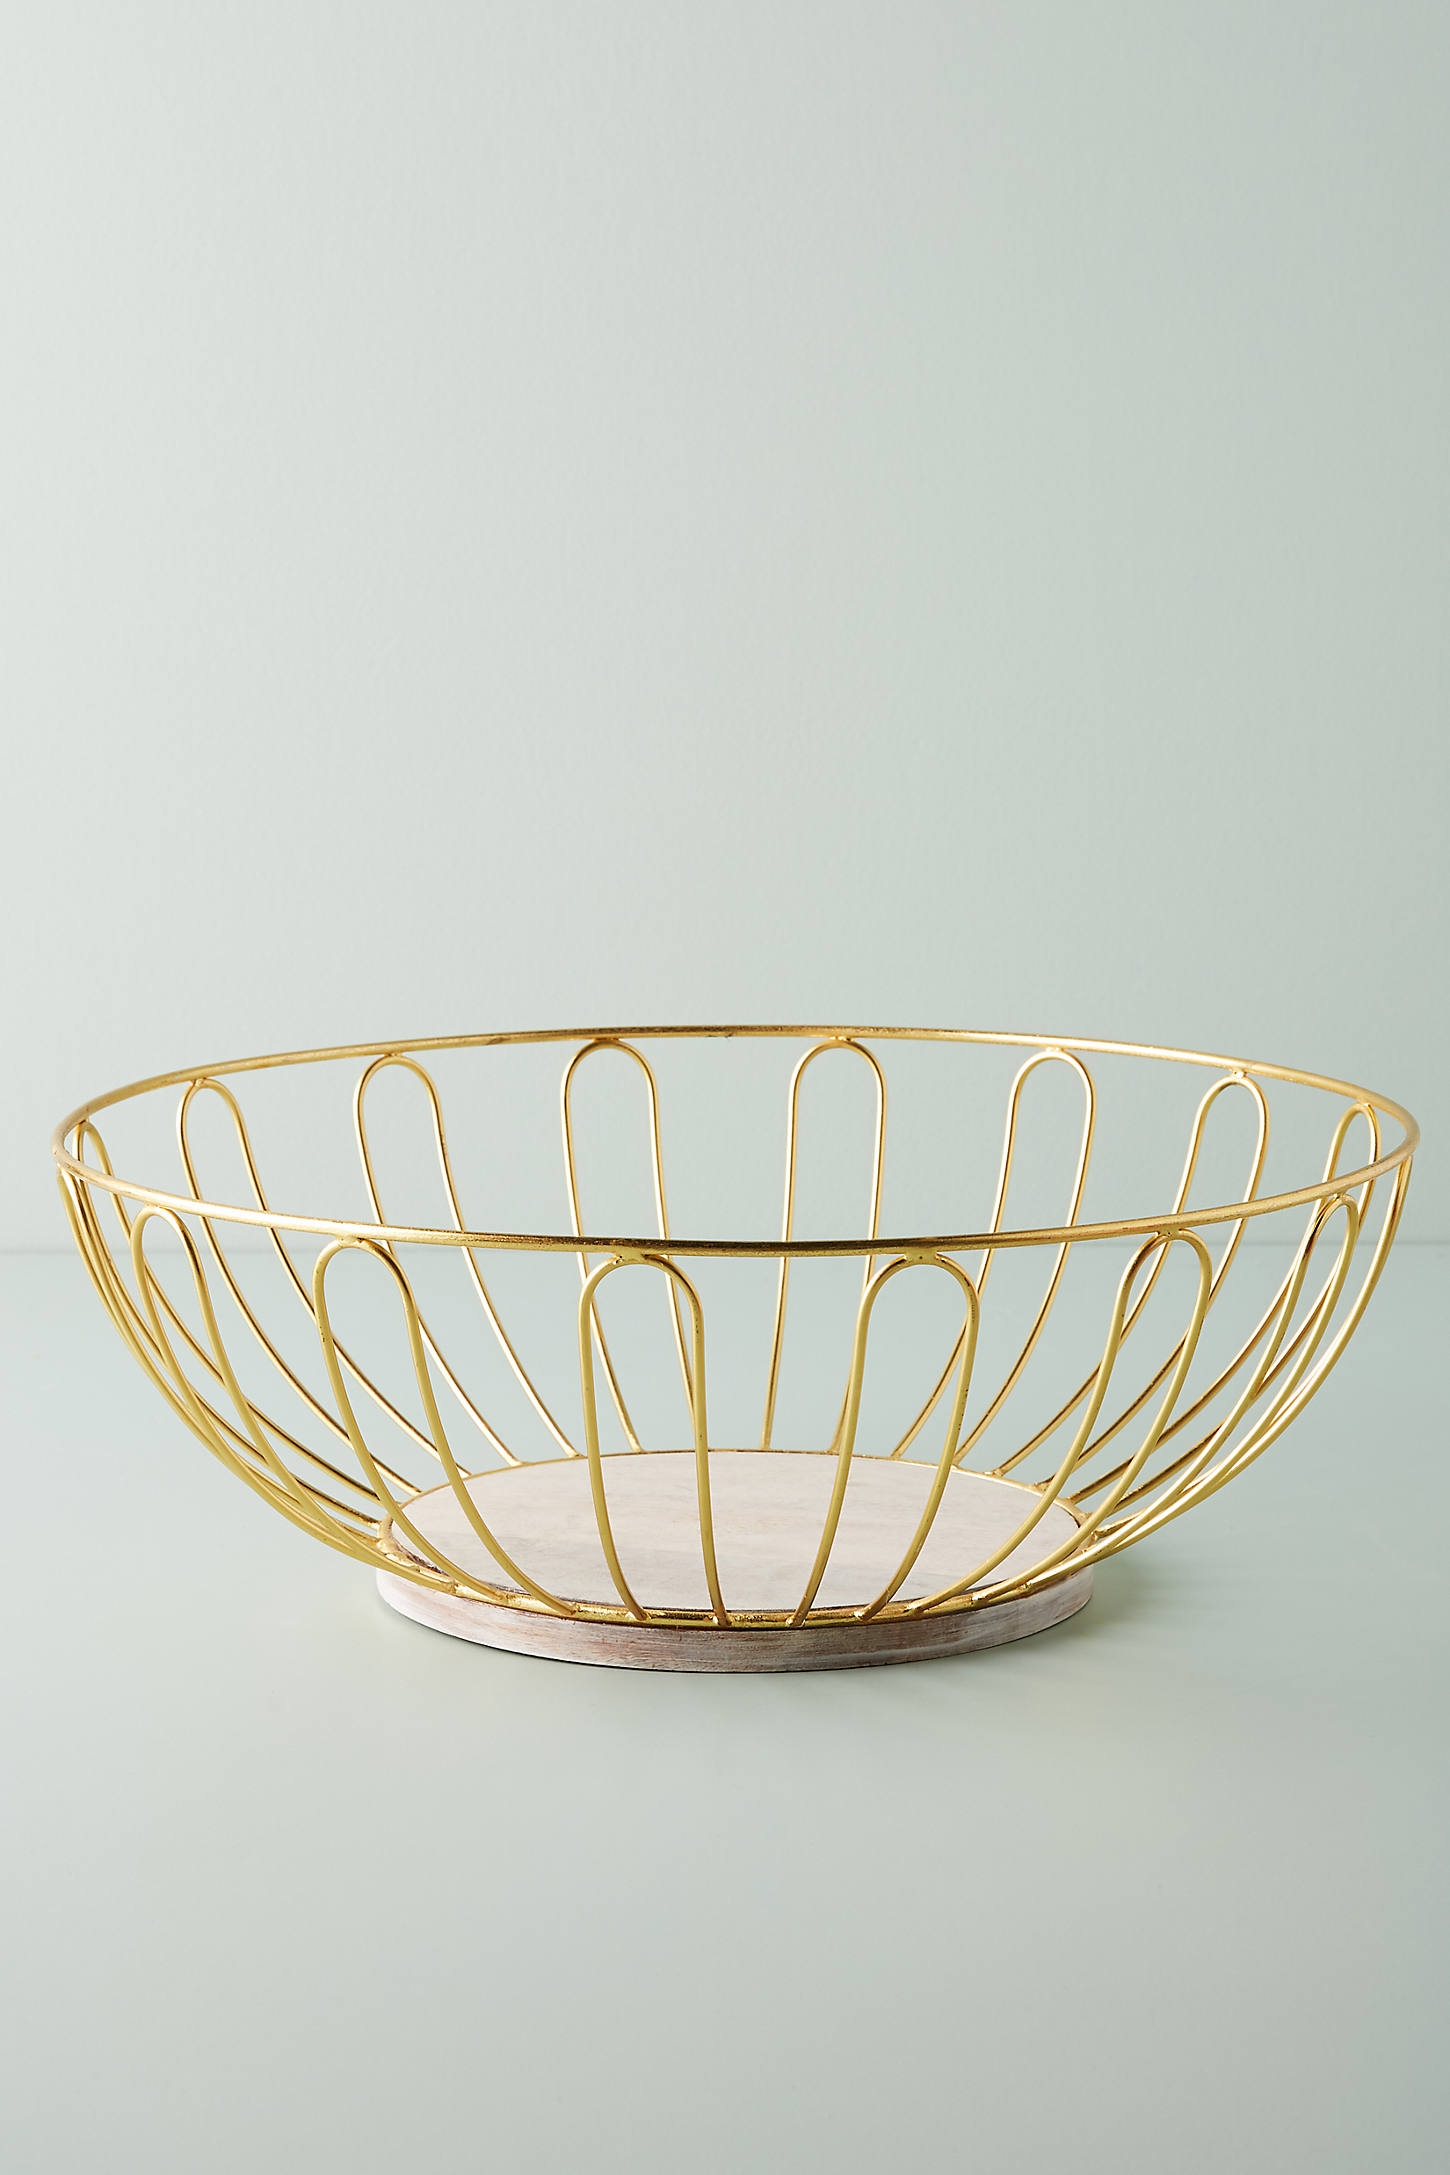 Gold Wire Fruit Basket - Image 0